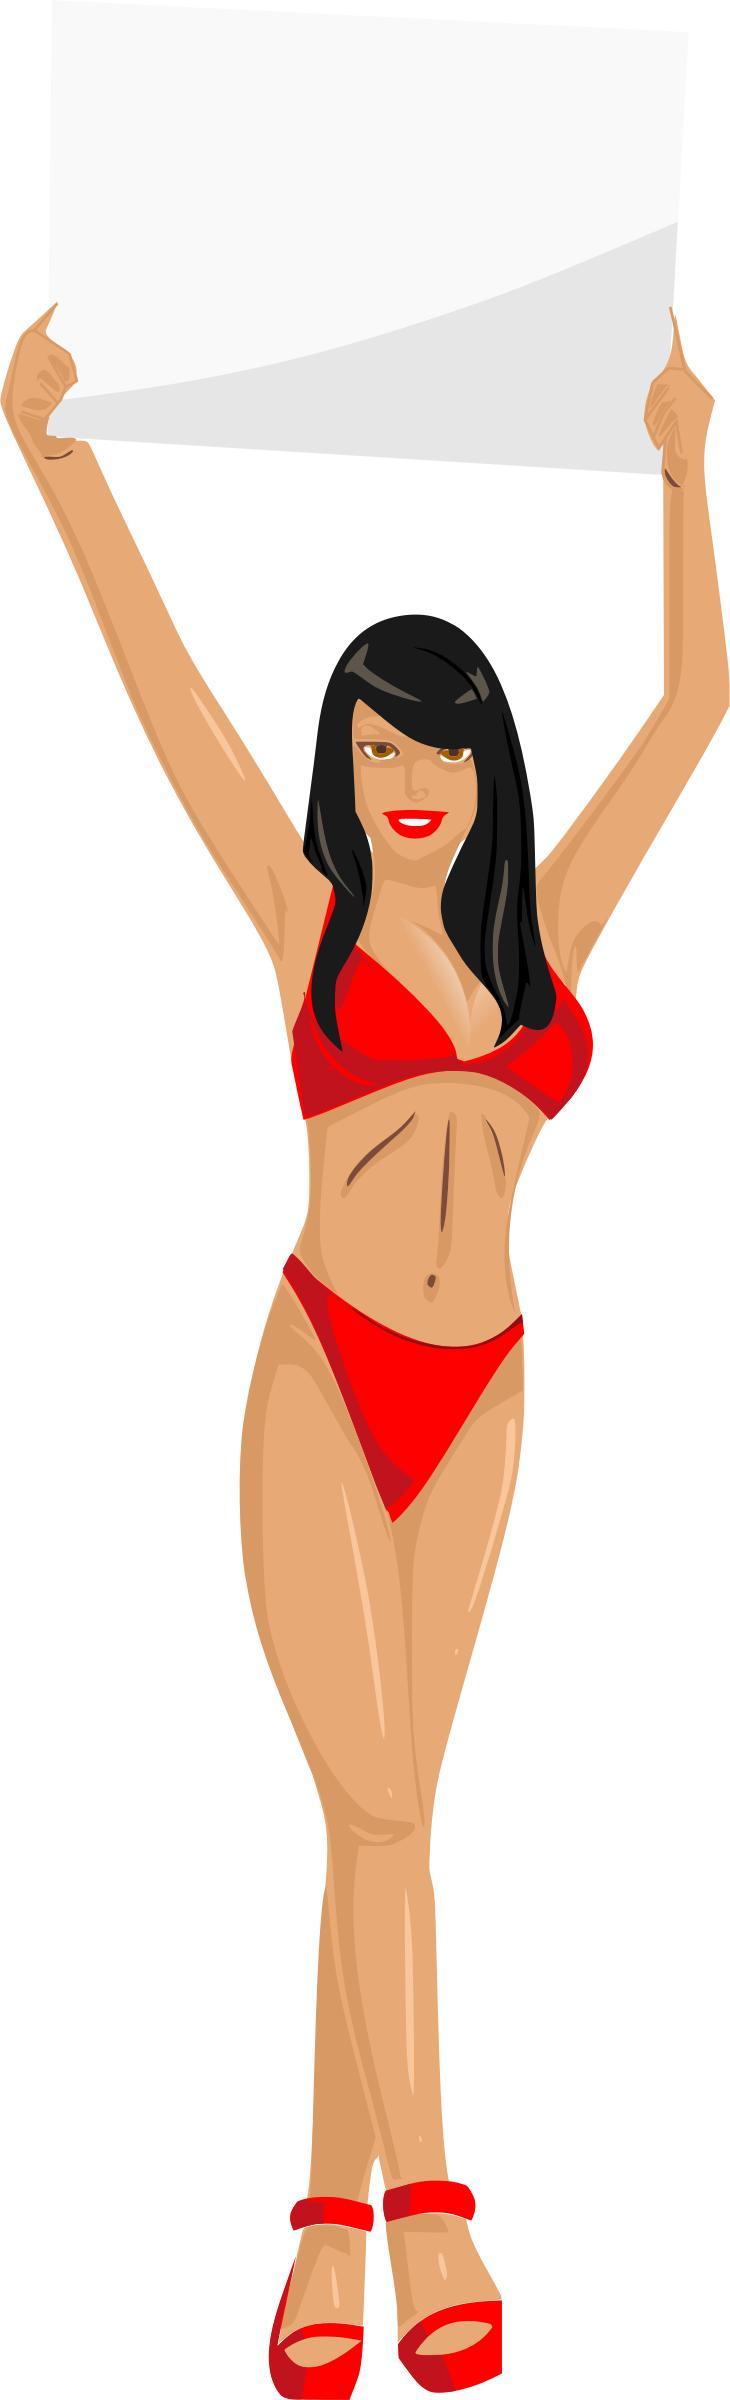 Girl with sign (red bikini, black hair, light skin) png transparent